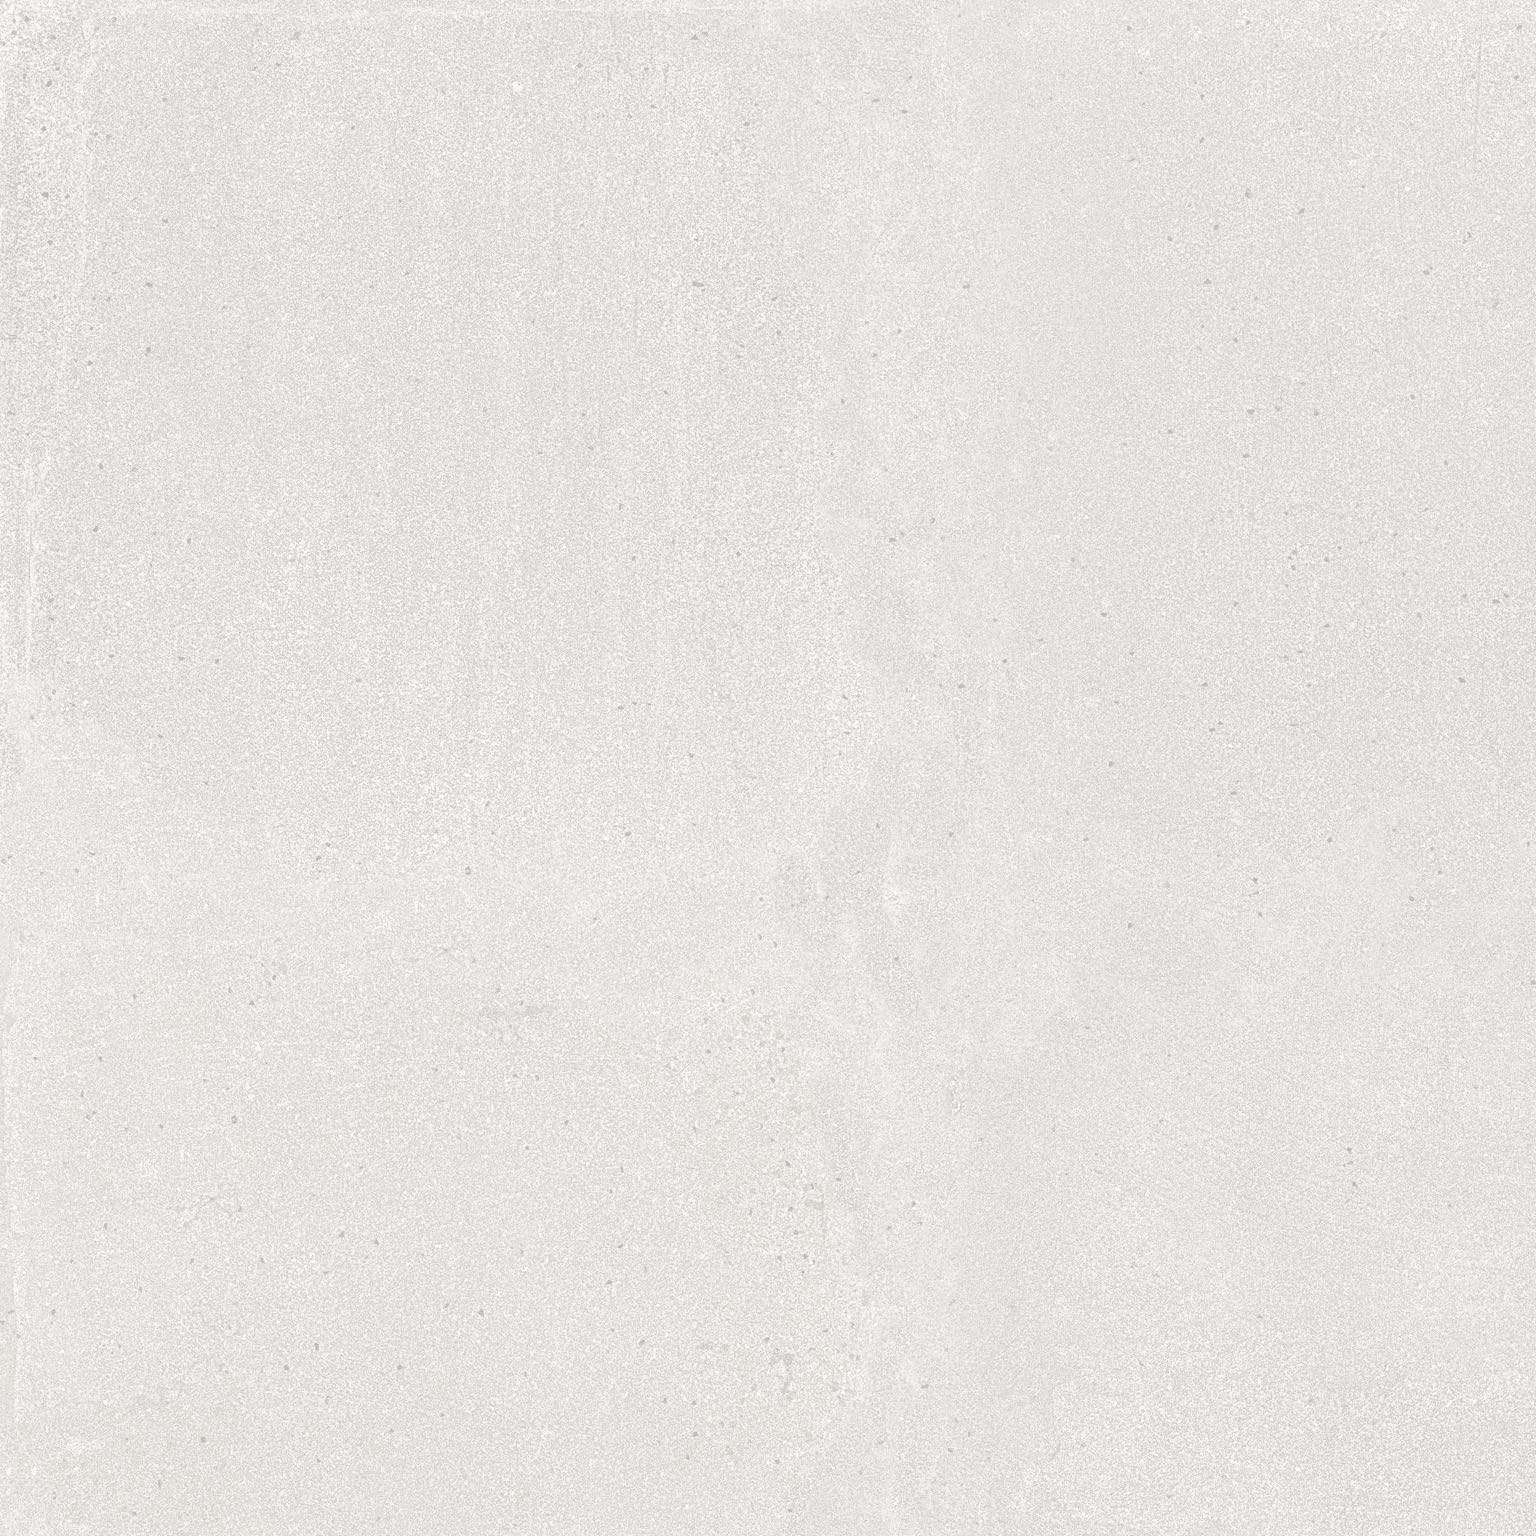 Керамогранит Absolut Keramika Cancun Lappato Pearl, цвет серый, поверхность лаппатированная, квадрат, 600x600